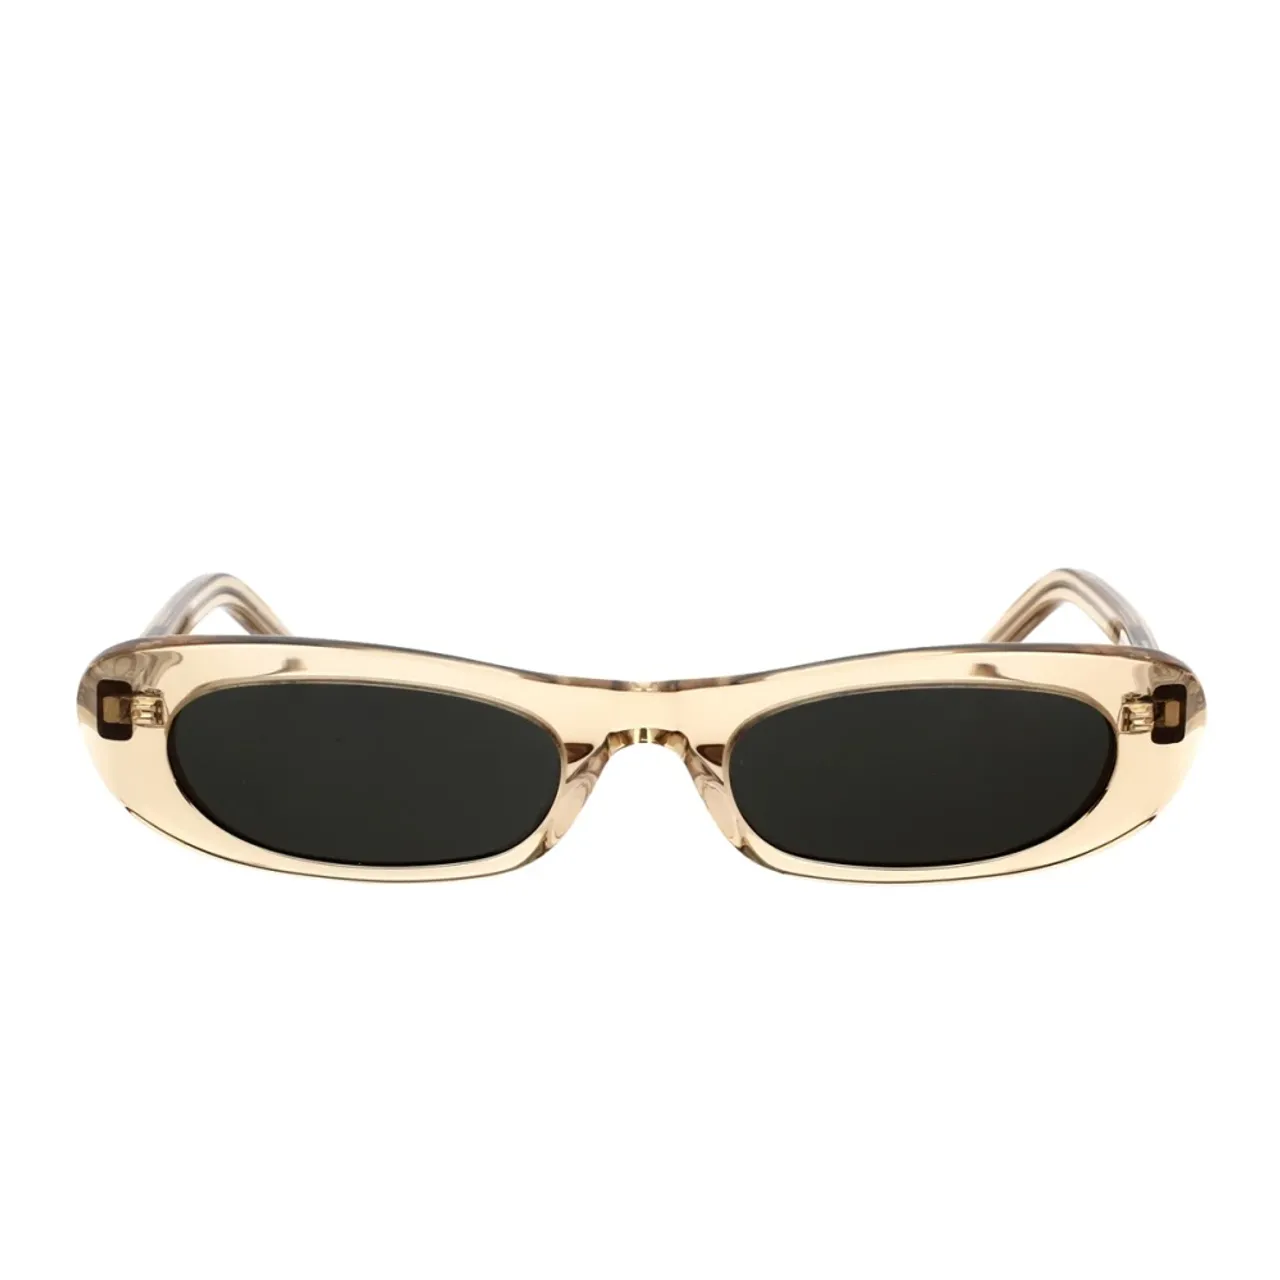 Vintage-inspirierte Damen-Sonnenbrille Saint Laurent